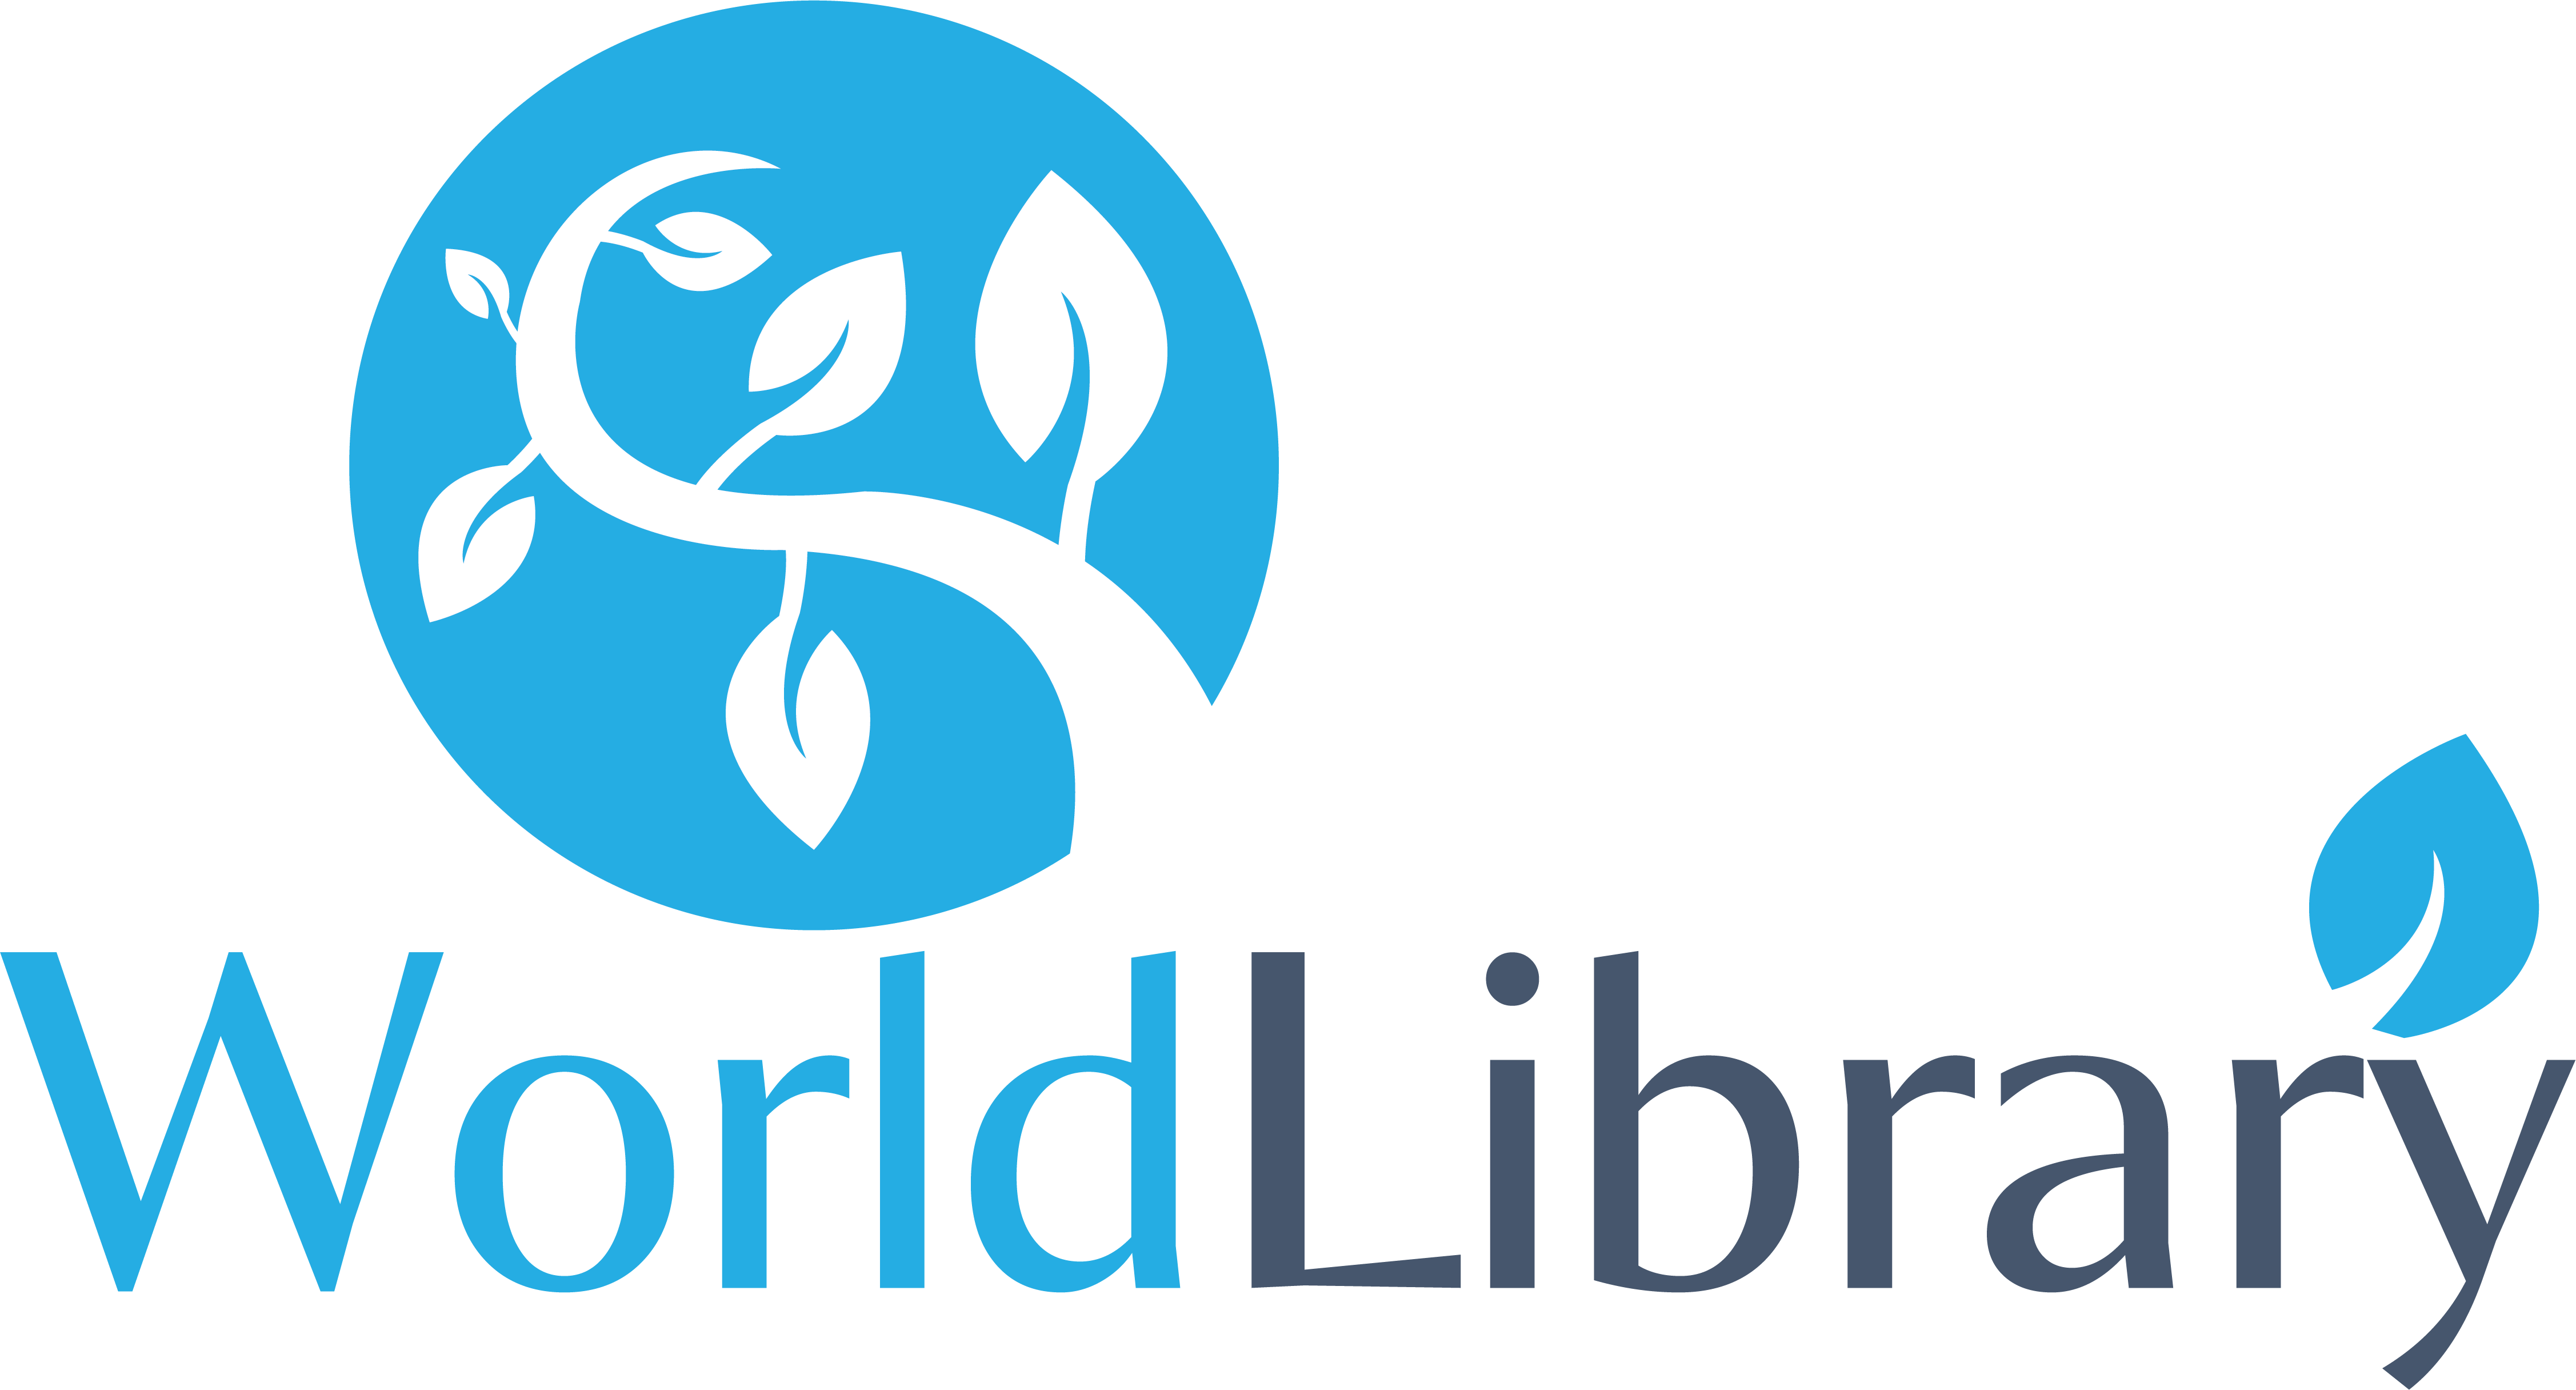 World eBook Library logo